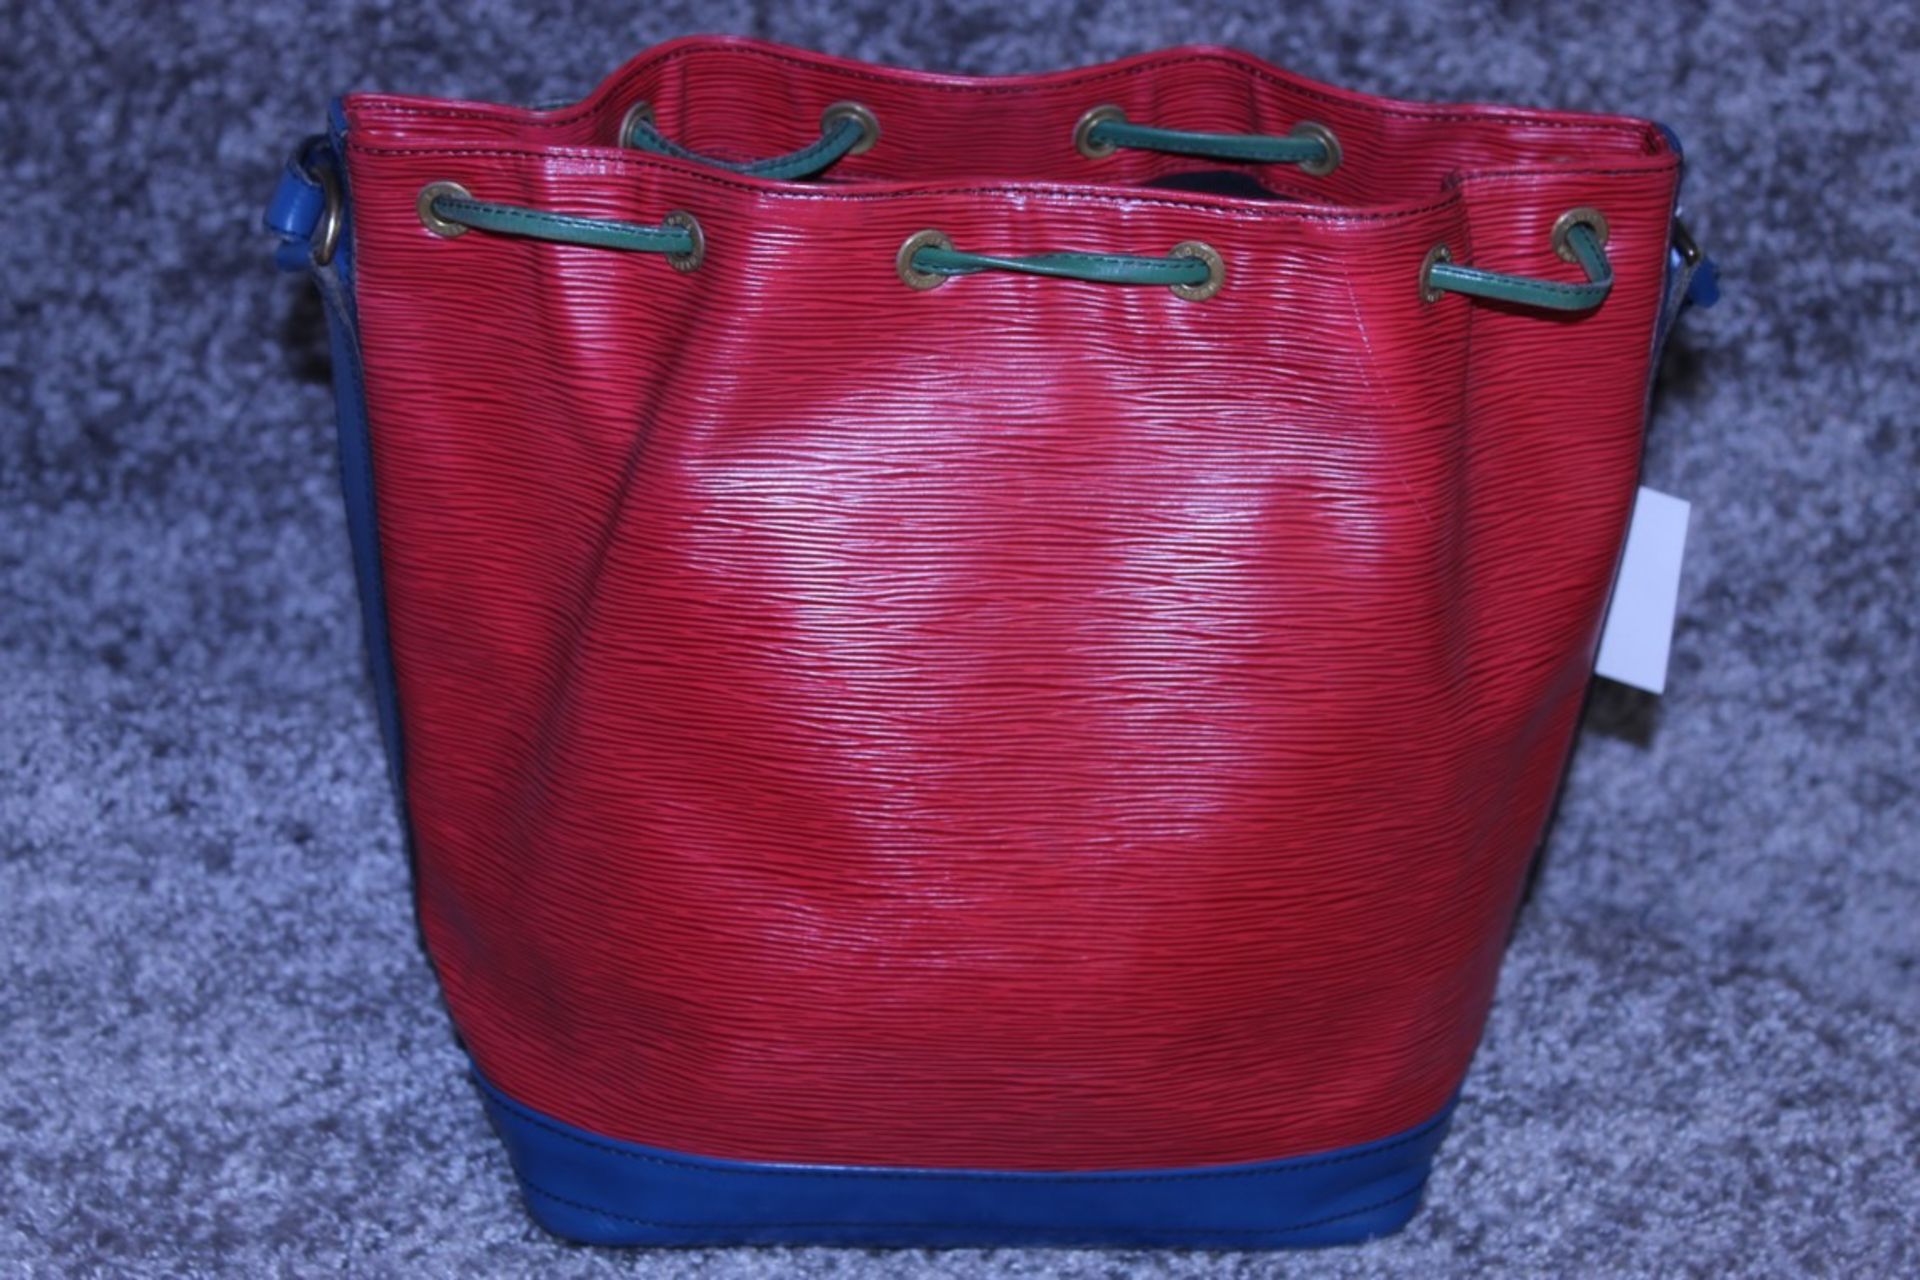 Rrp £1,200 Noe Tricolor Shoulder Bag, Red/Blue/Green Epi Claf Leather With Black Stitching